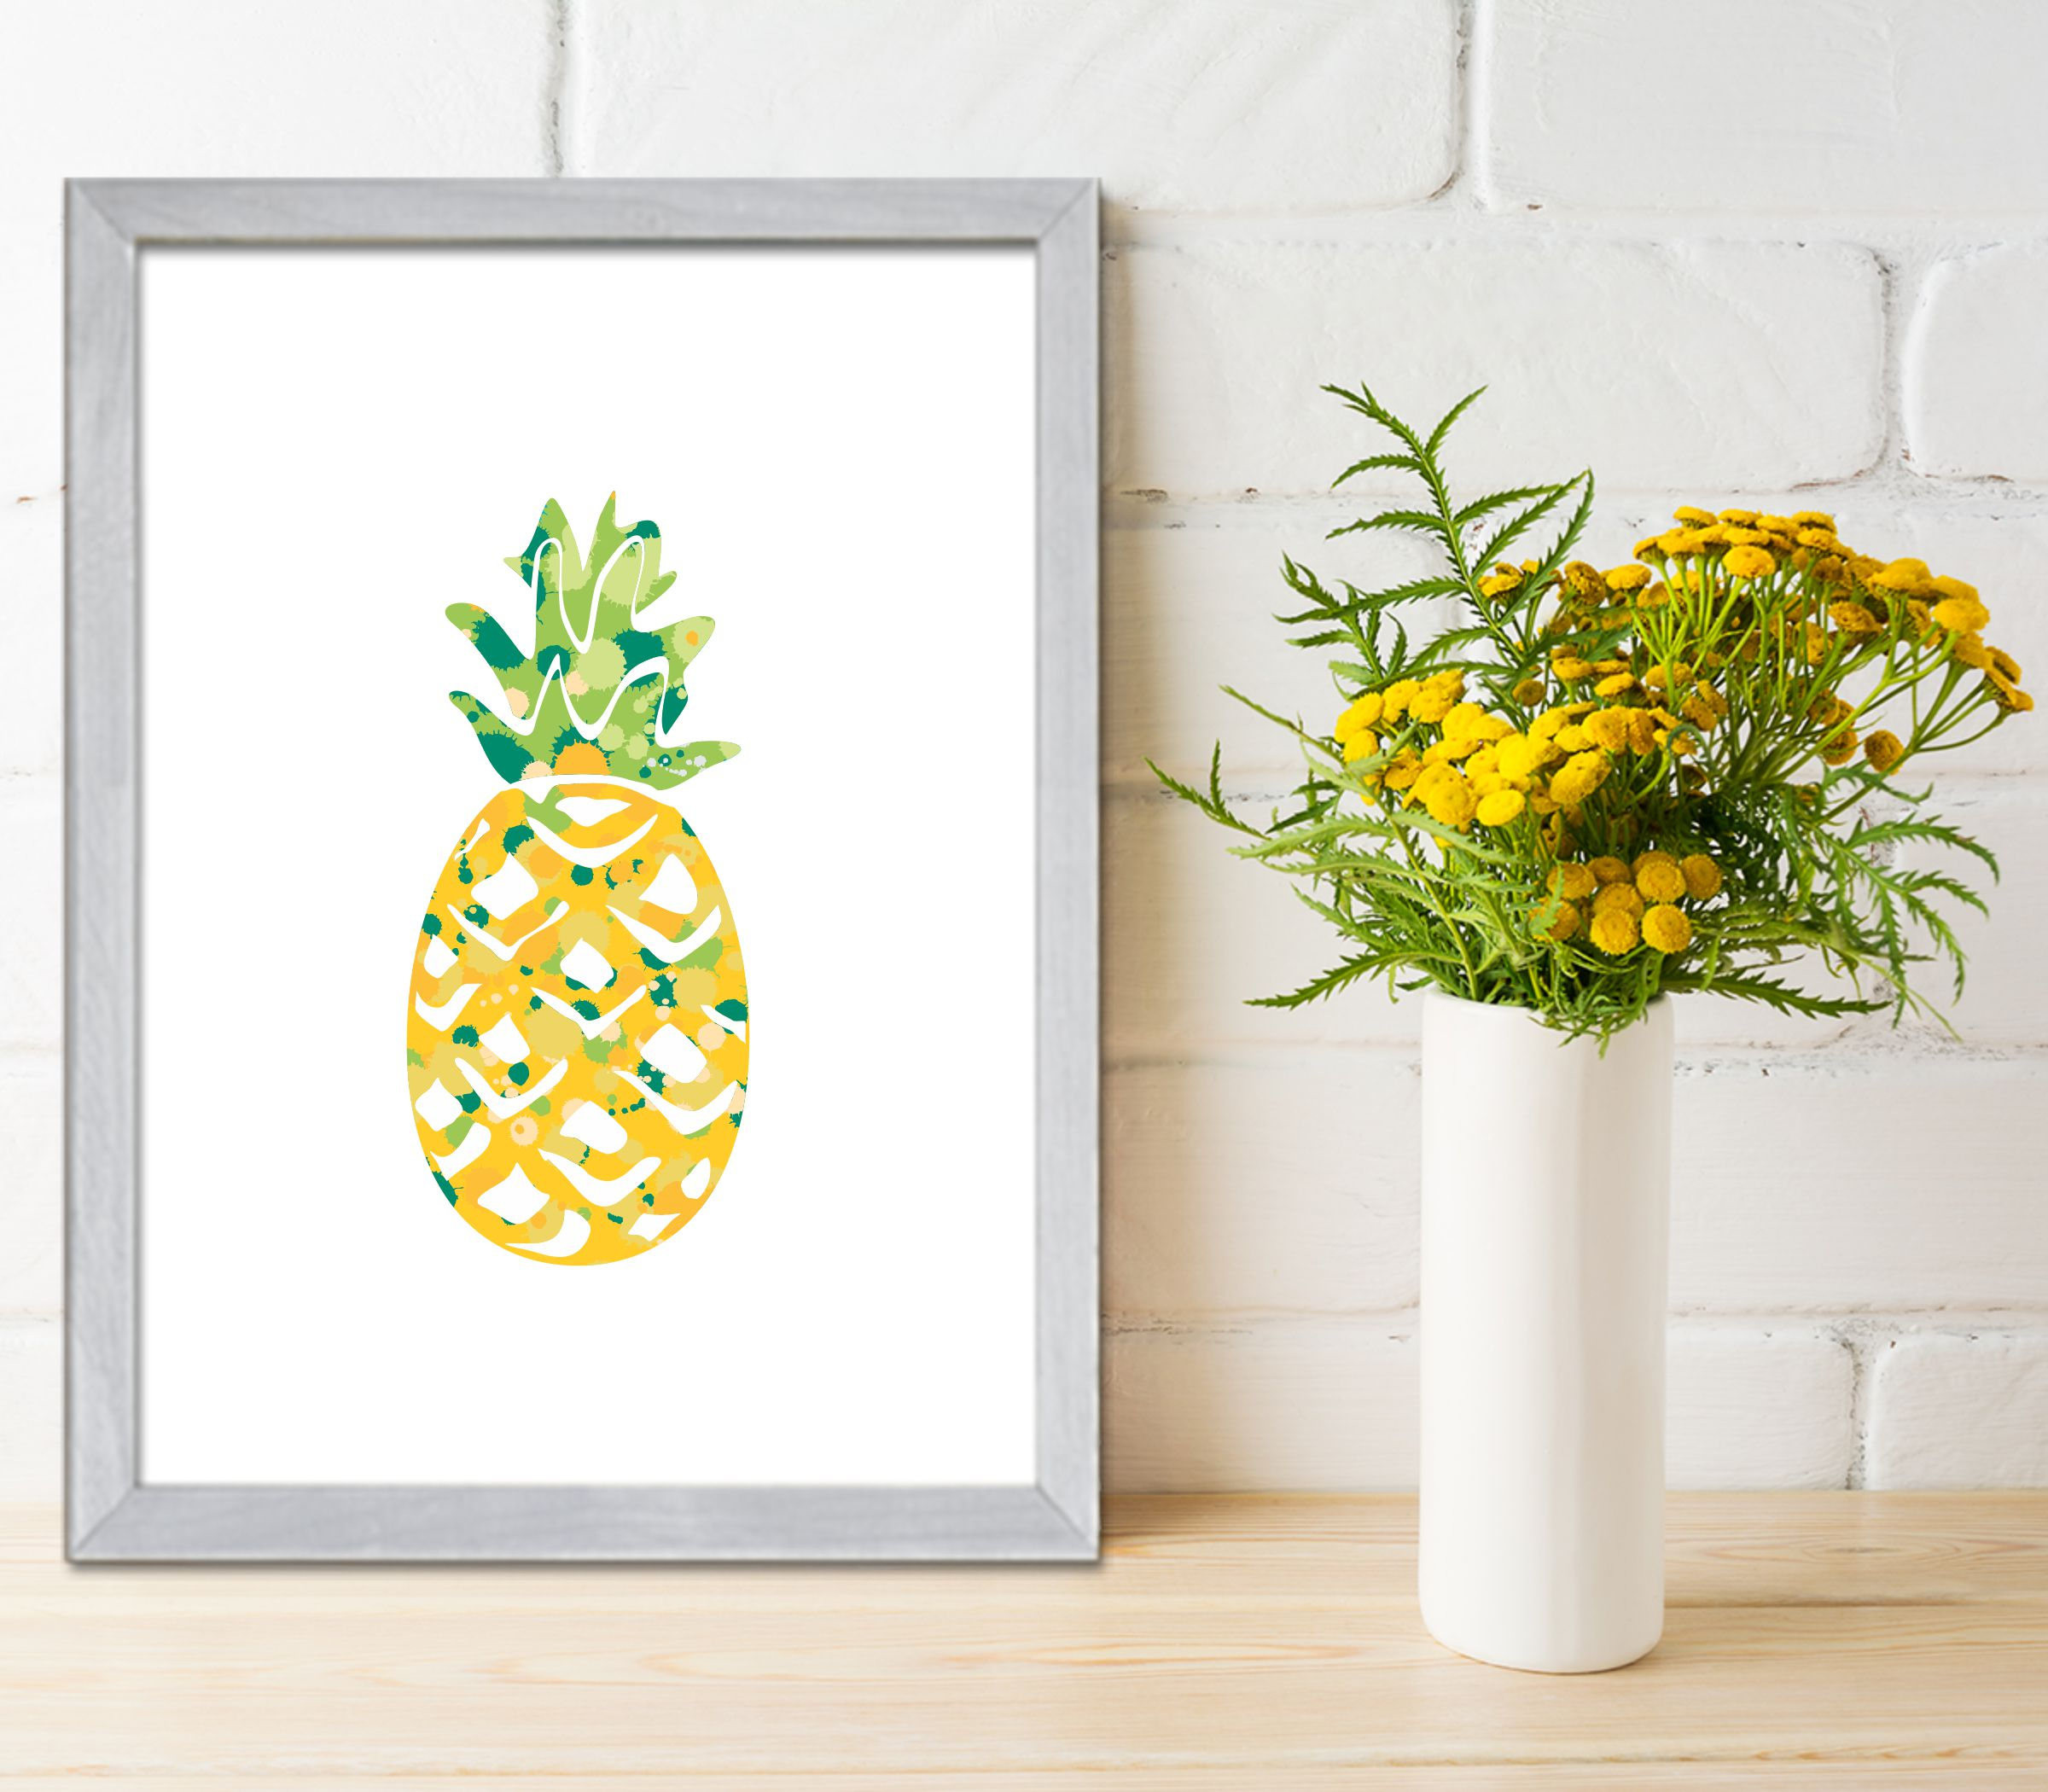 Fruit Wall Art Kitchen
 Pineapple Print Tropical Fruit Wall Art Kitchen Decor